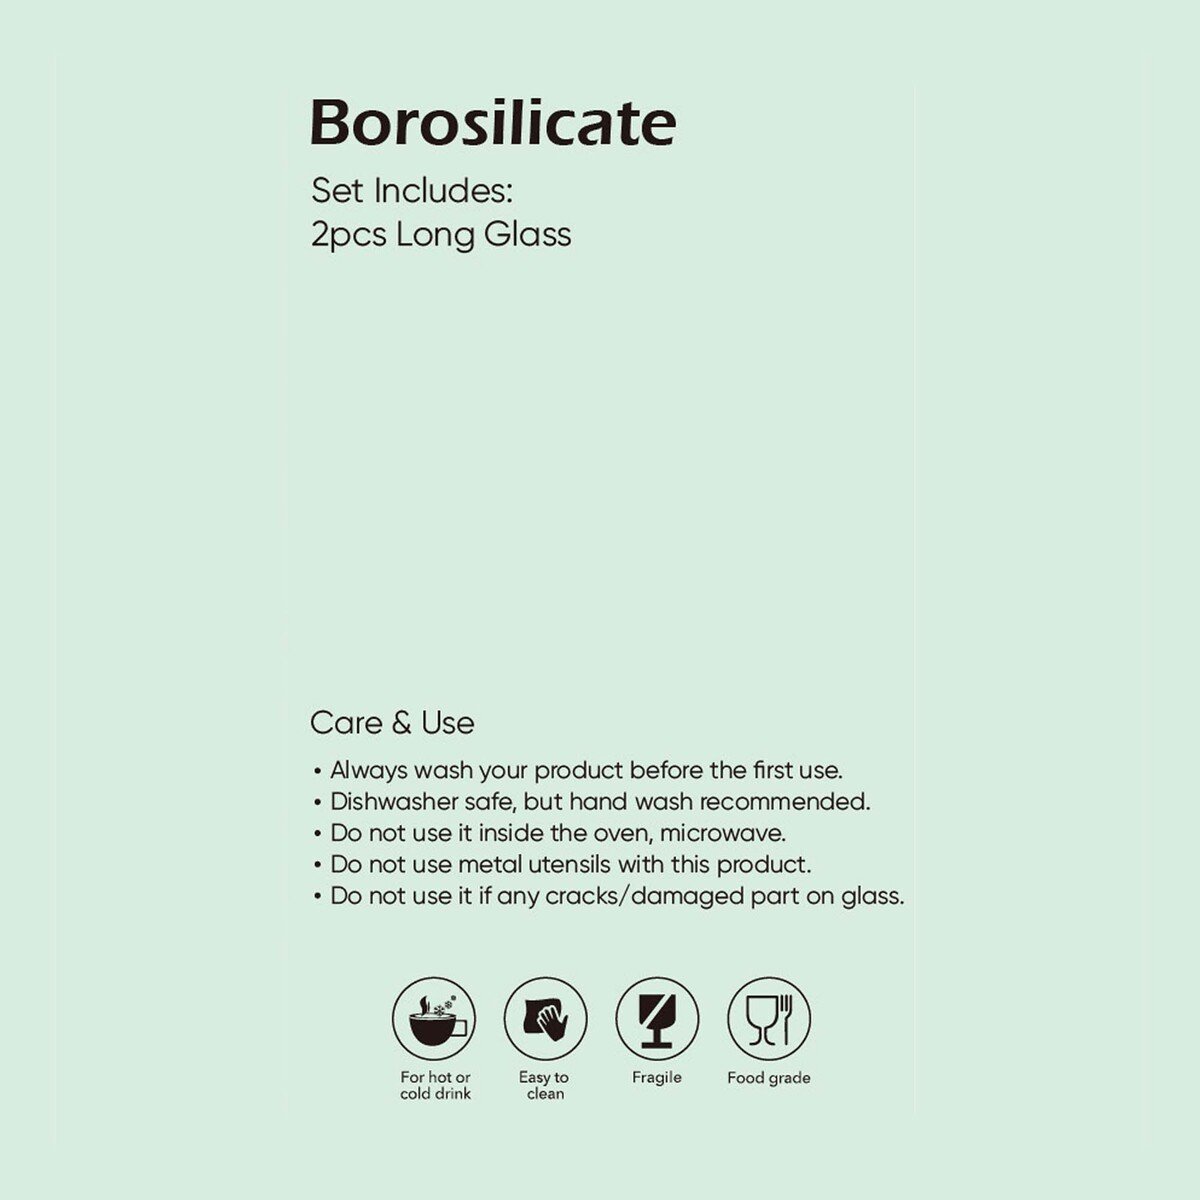 Crystal Drops Borosilicate Double Wall Long Glass Set, 350 ml, 2 Pcs